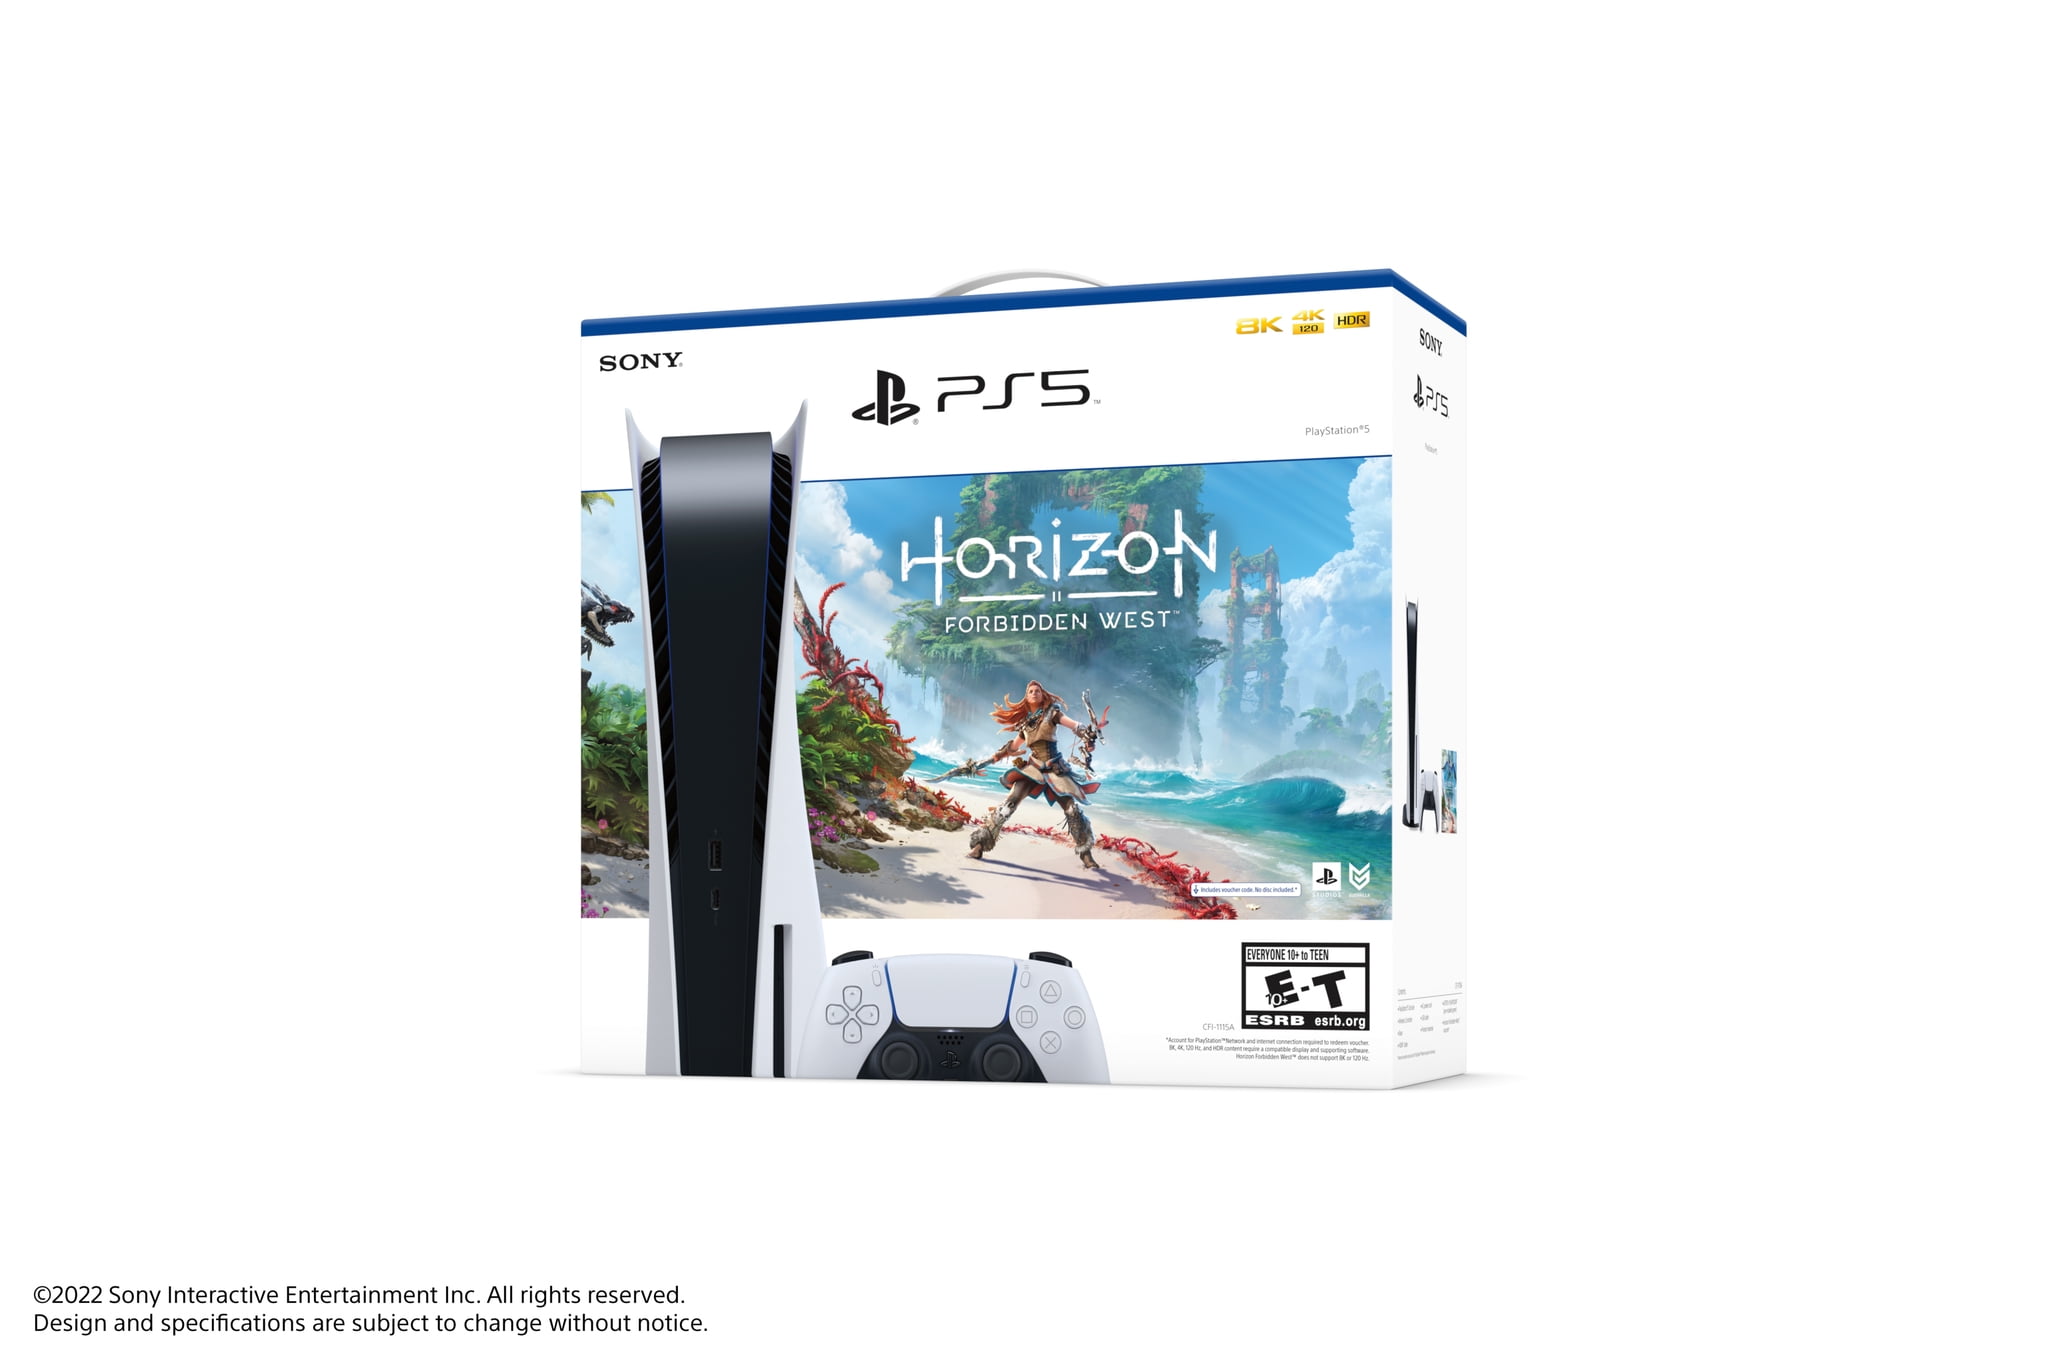 Playstation 5 Console Horizon Forbidden West Bundle : Target